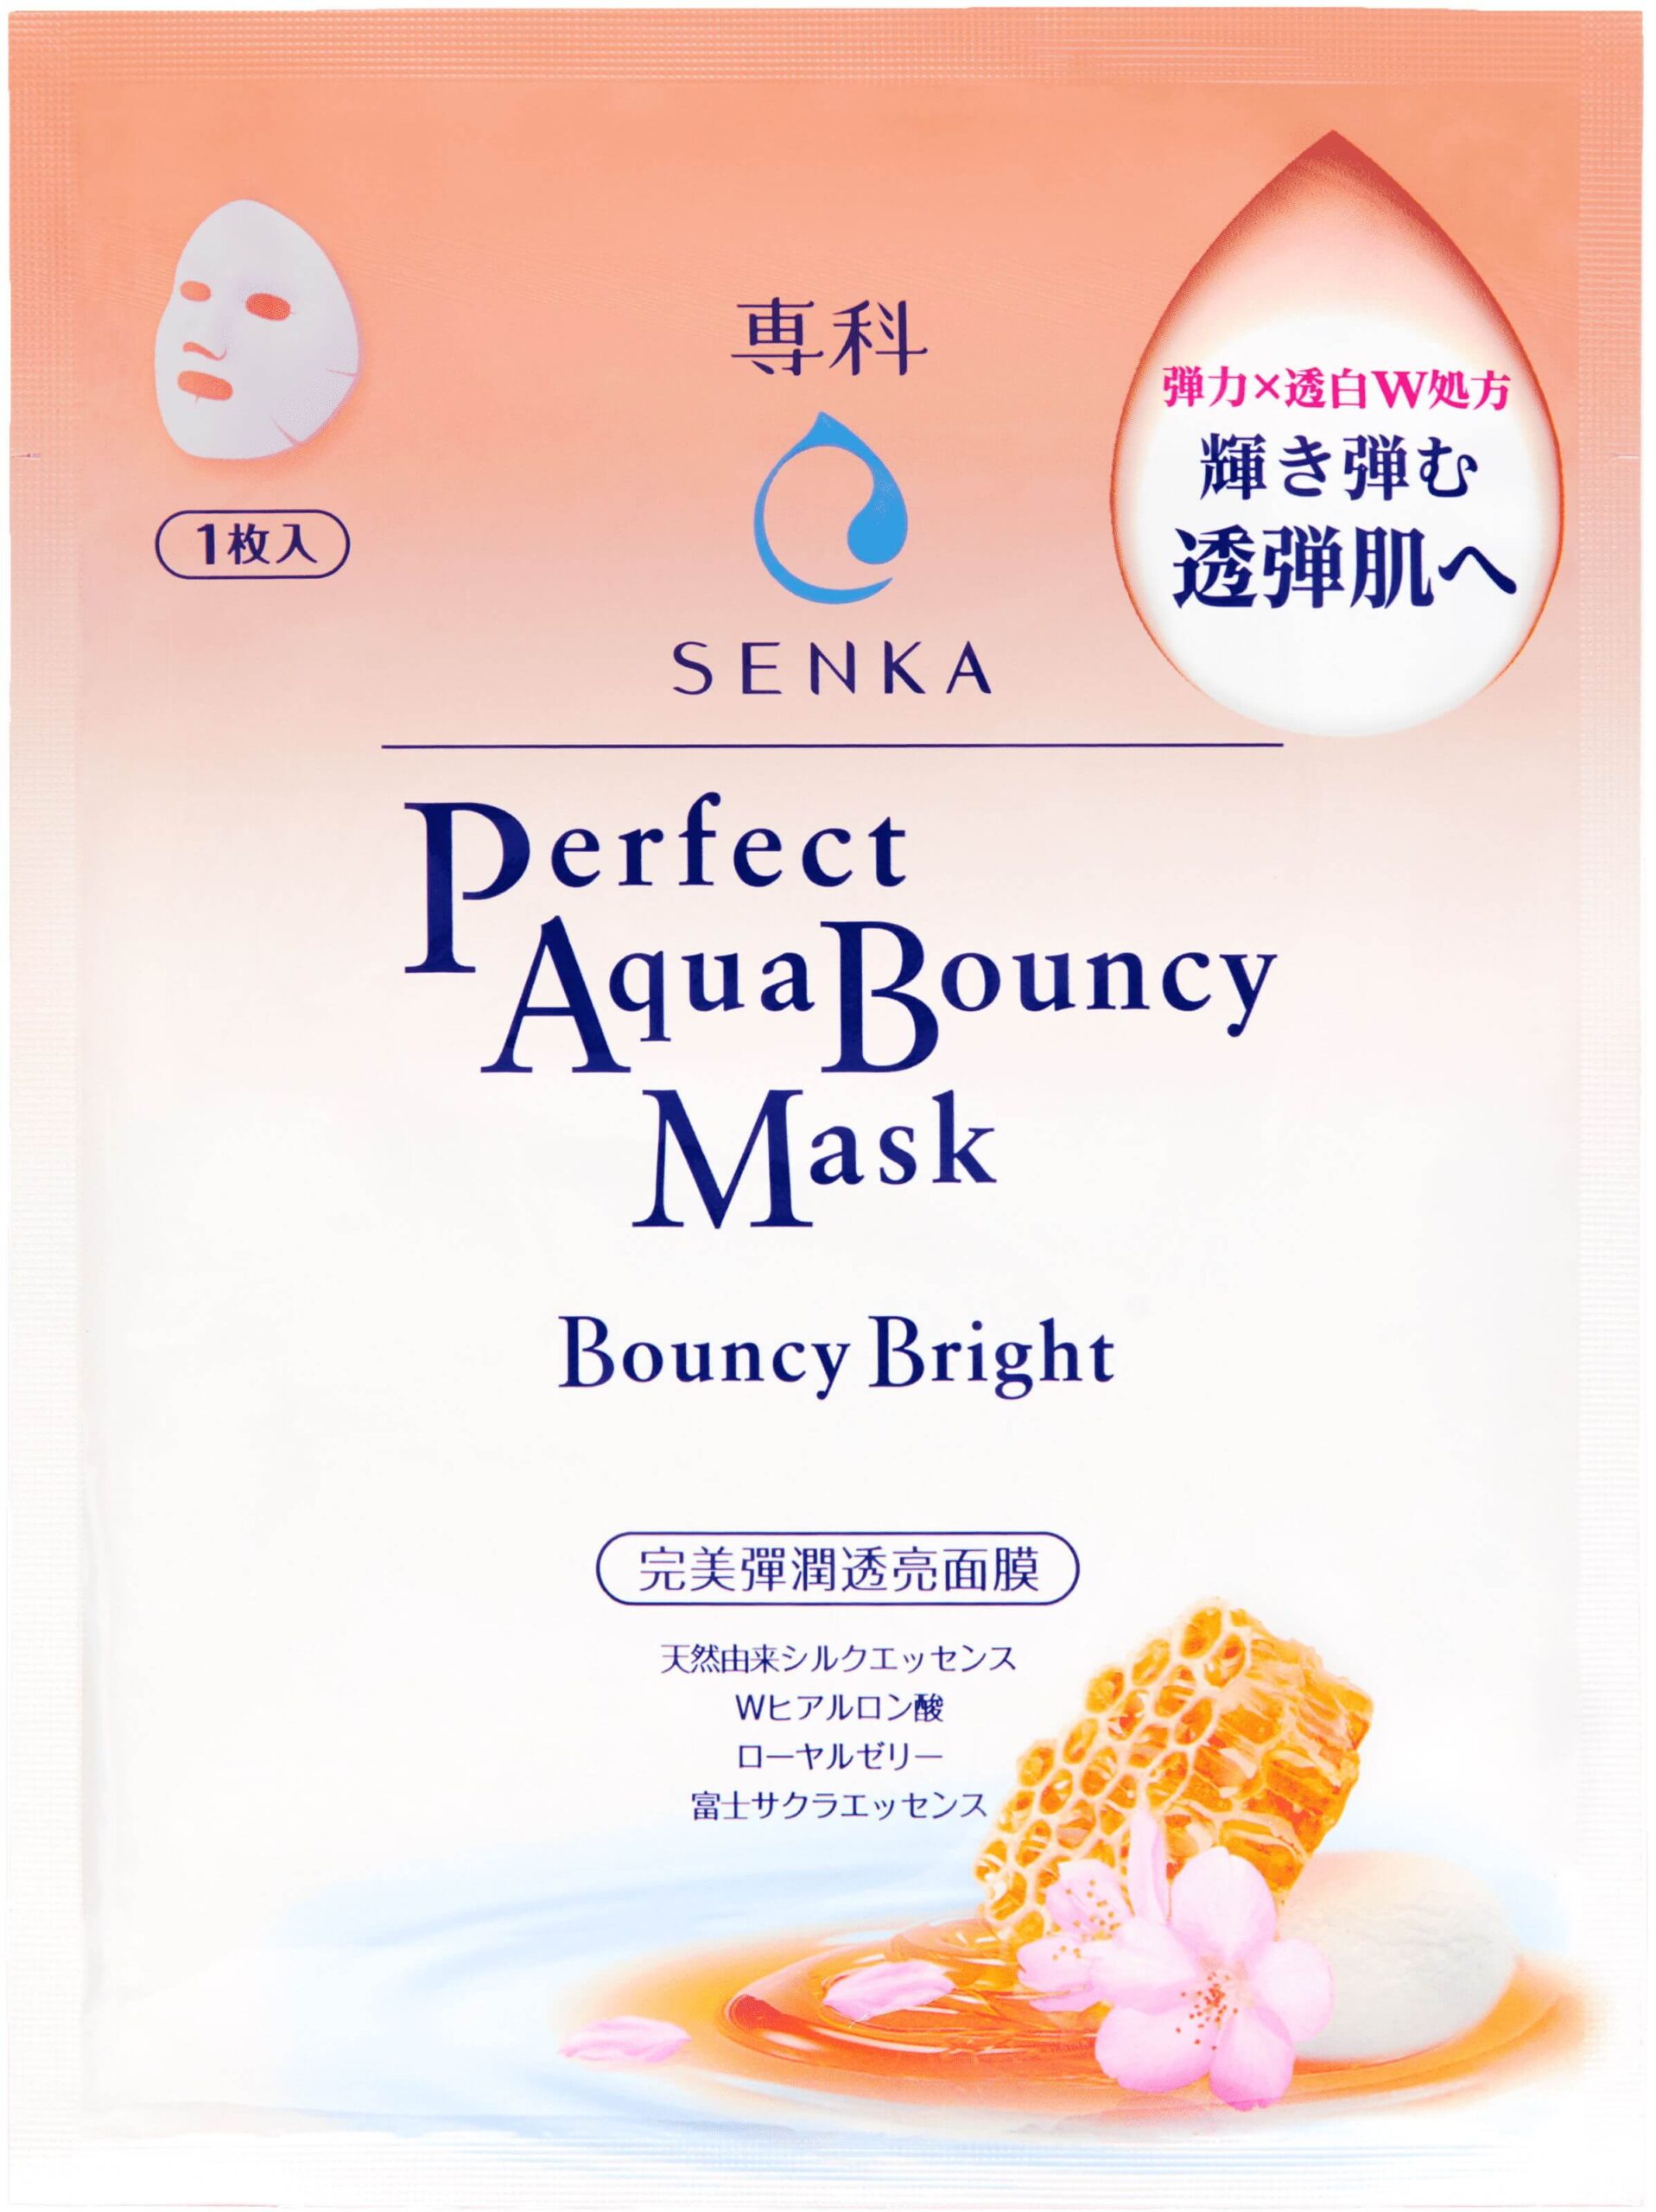 Senka Perfect Aqua Bouncy Mask – Bouncy Bright